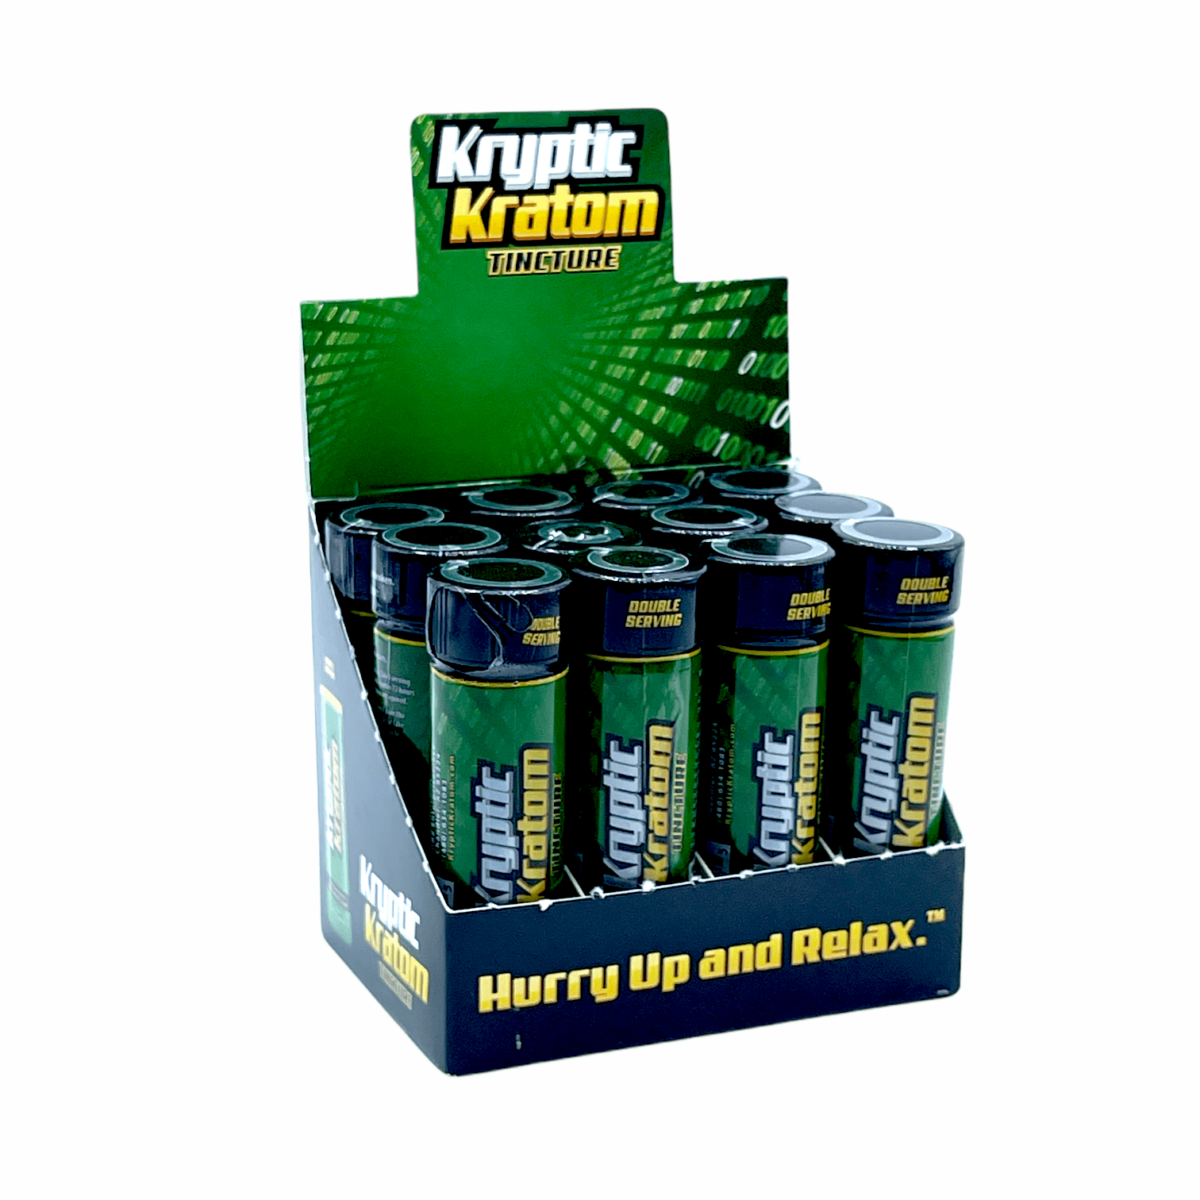 Kryptic Kratom Extract Liquid Shot – display box 15ml 12 bottles